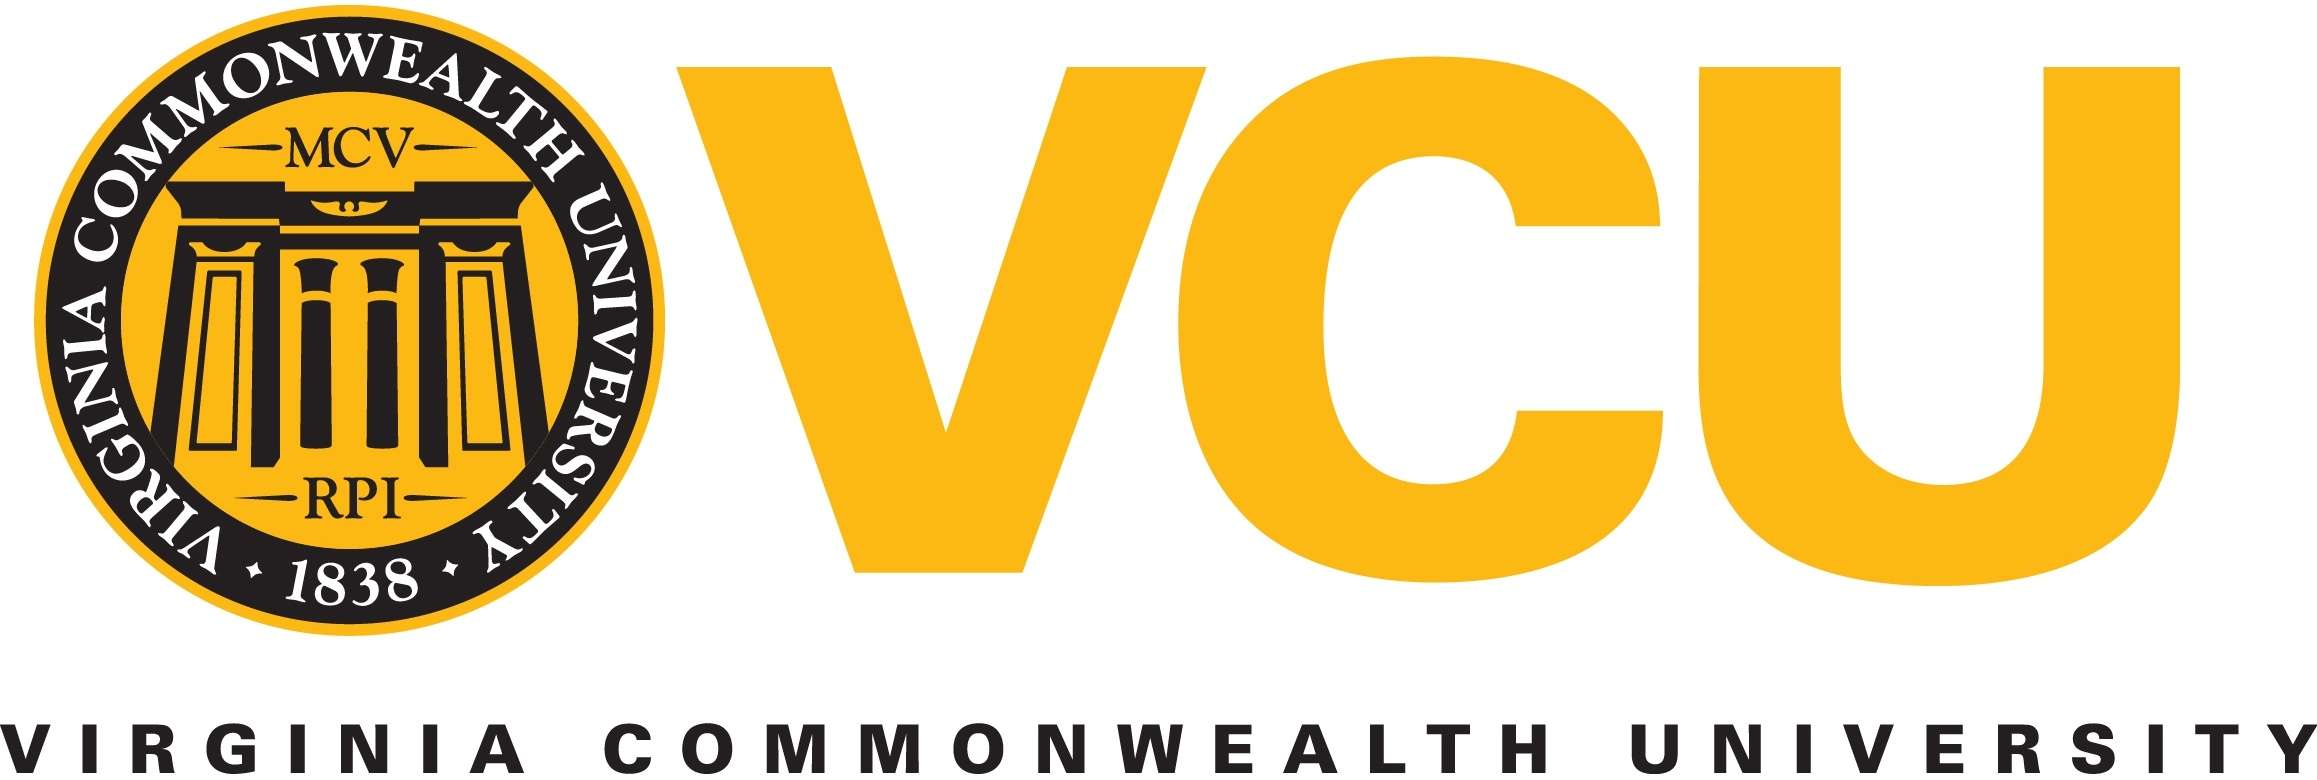 VCU Logo&Seal [vcu.edu - Virginia Commonwealth University]